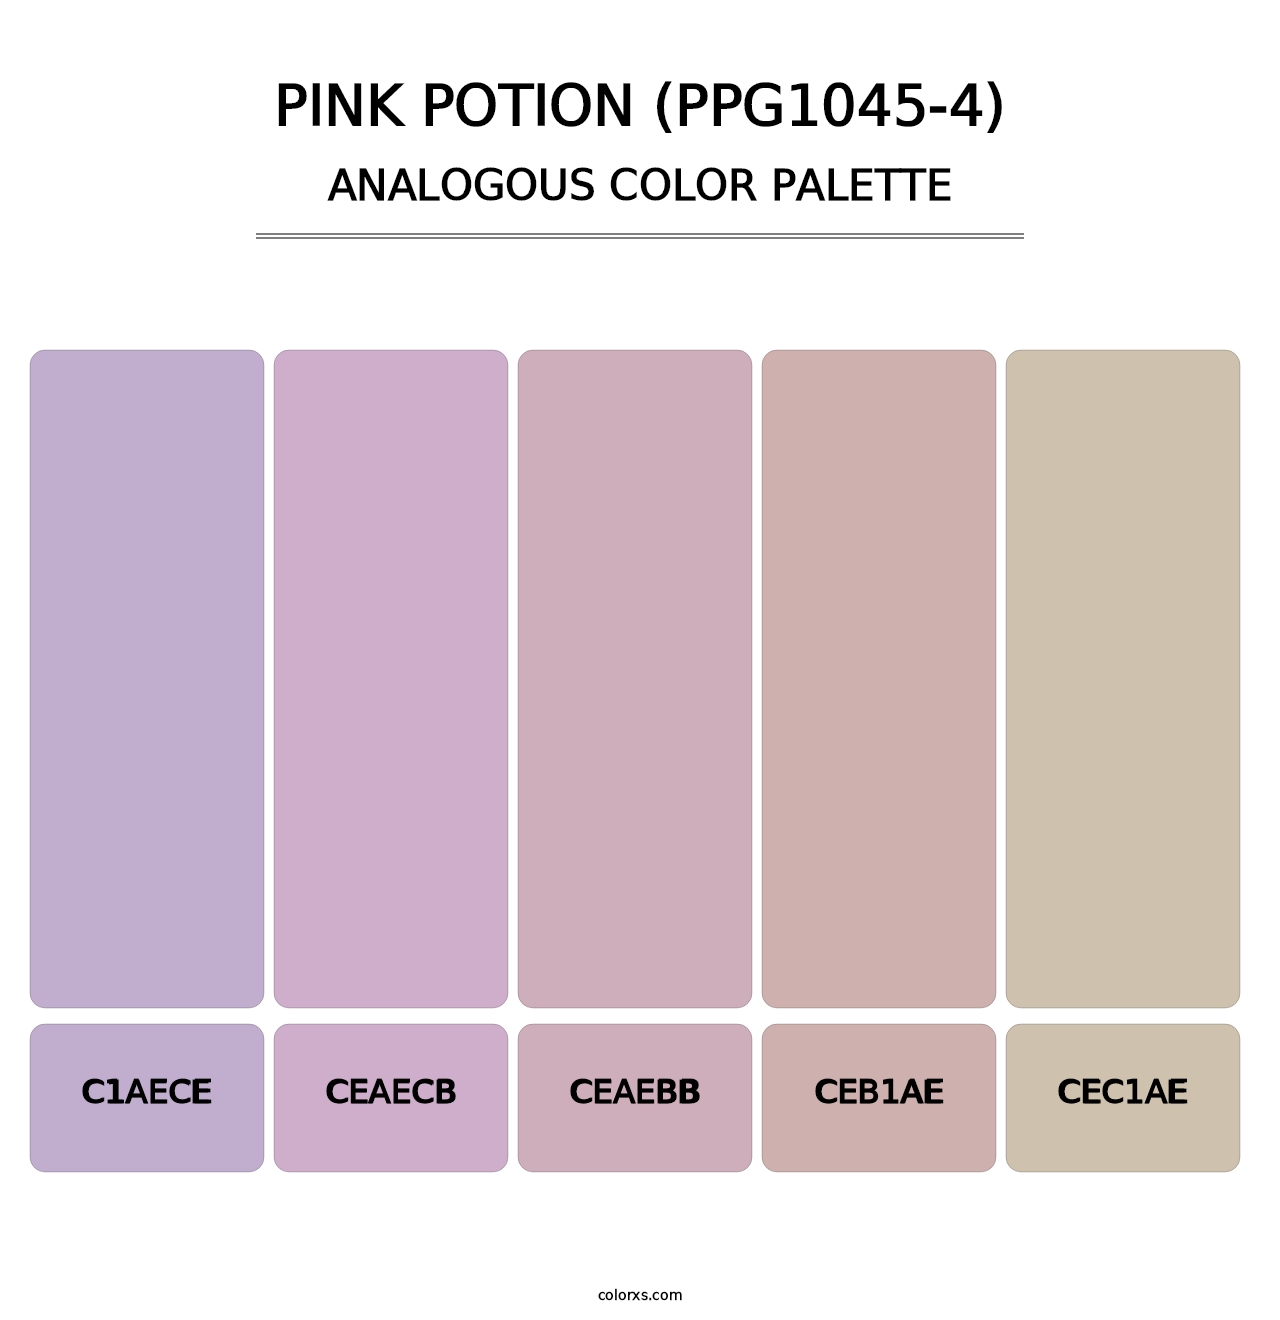 Pink Potion (PPG1045-4) - Analogous Color Palette